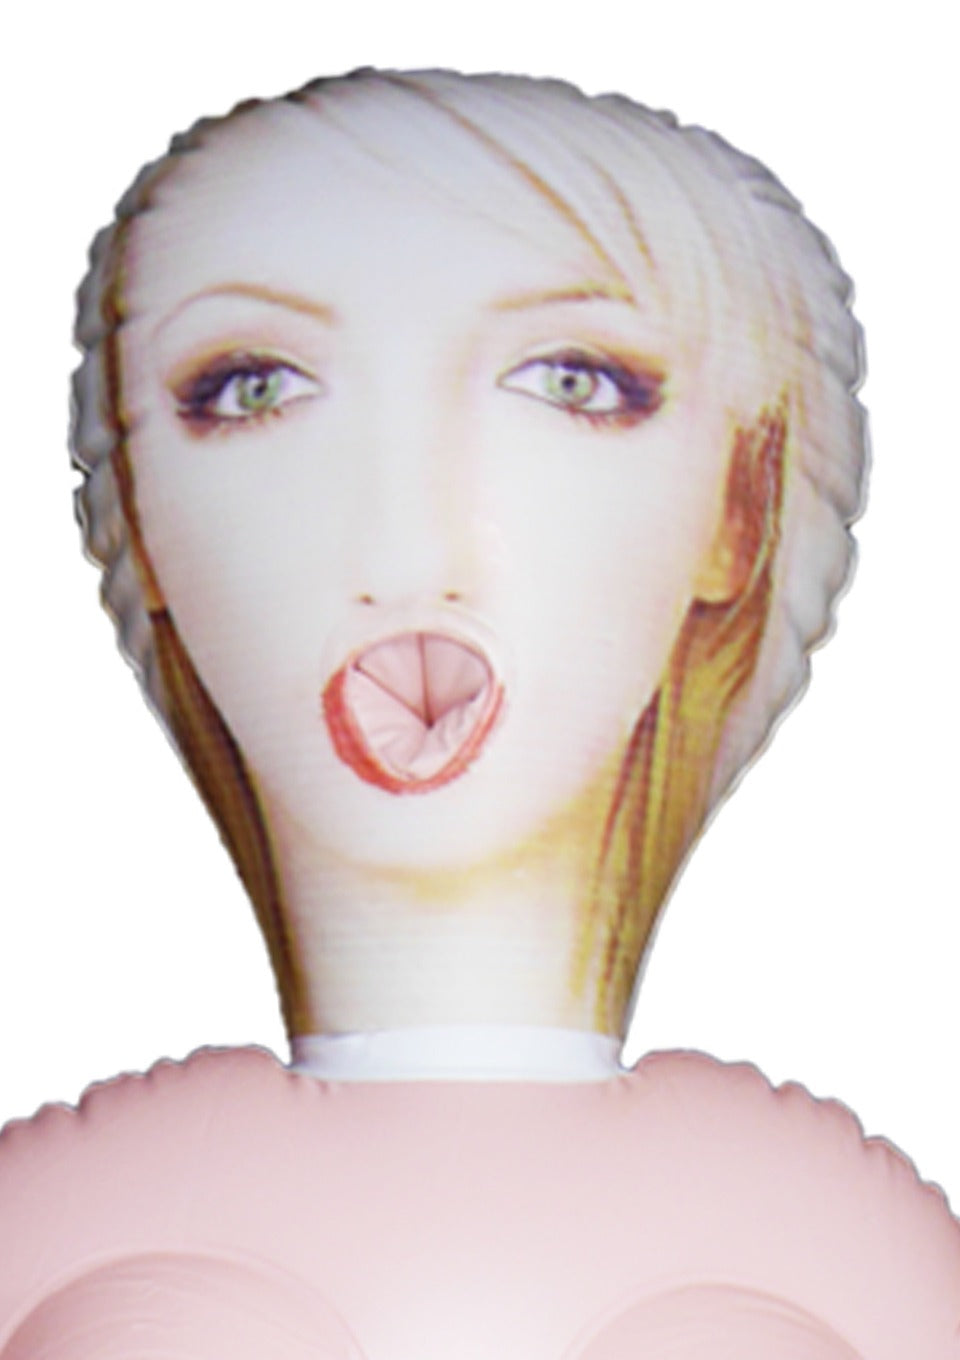 Bossoftoys - 26-00016 - Bruksela love doll - 150 cm - Blowup doll - Triple holes - Masturbator - Inflatable doll